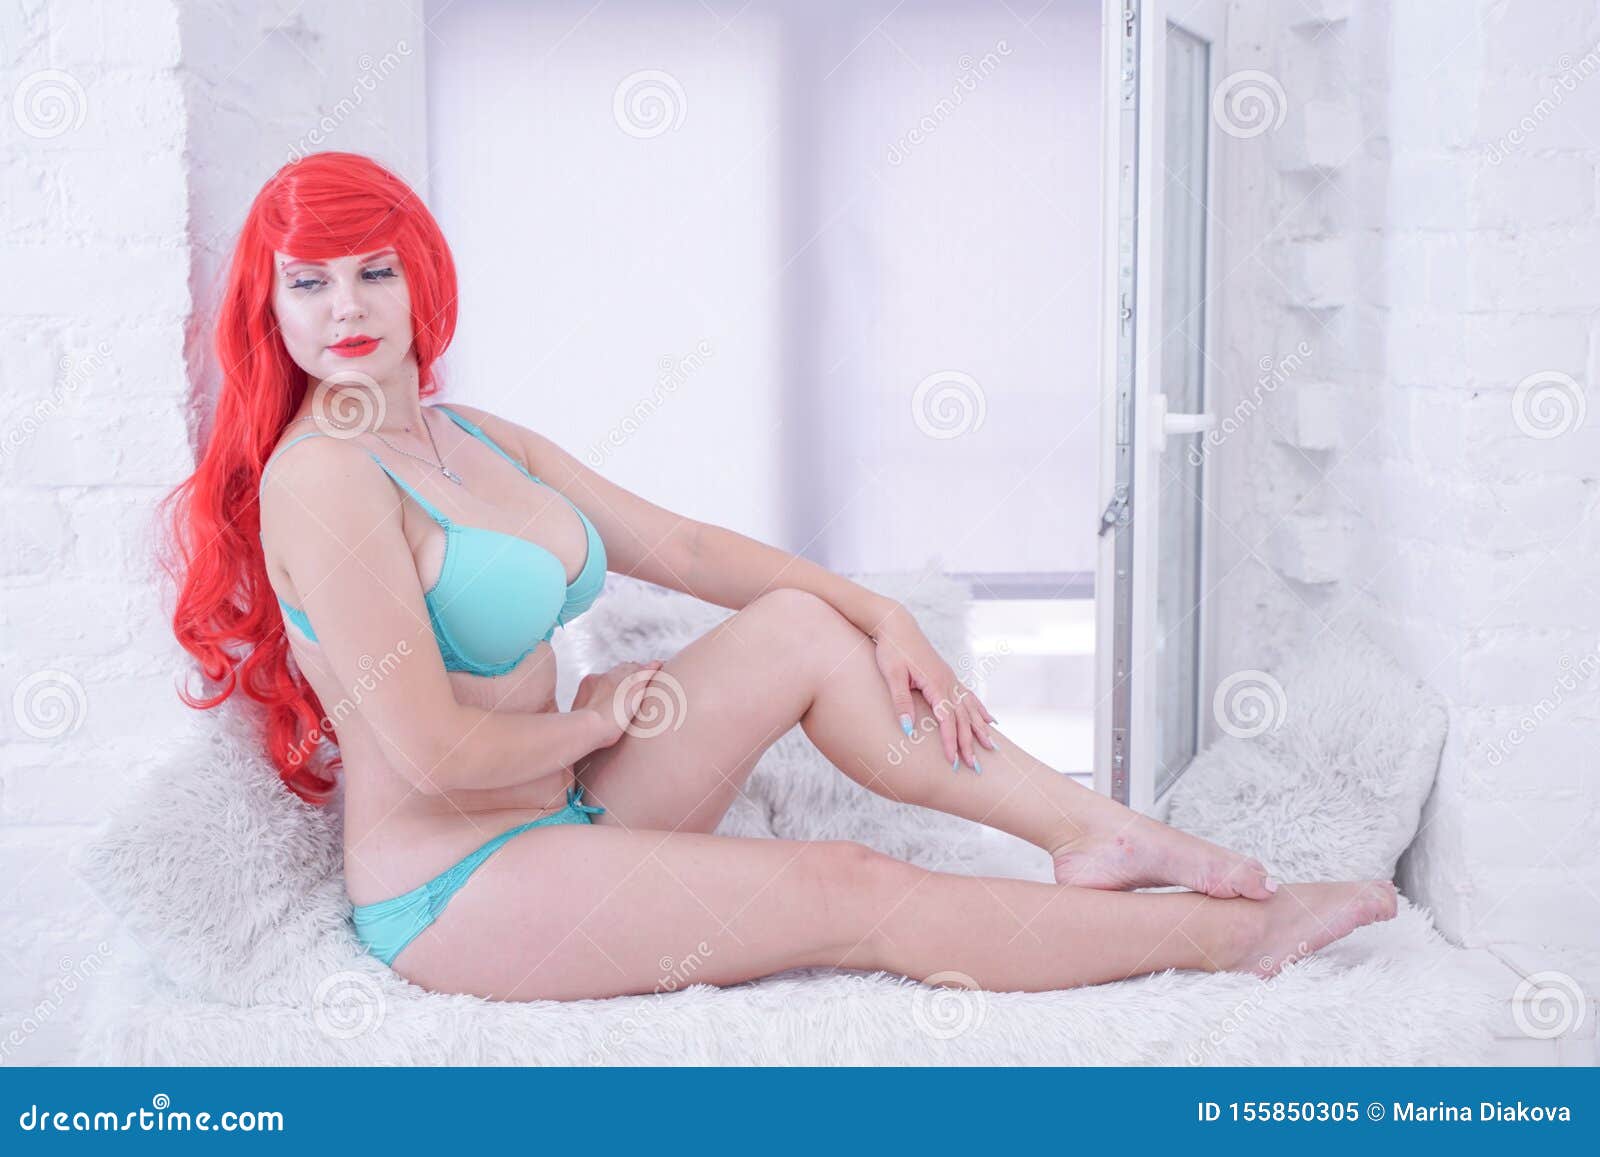 angela elizondo share redheads with big breasts photos